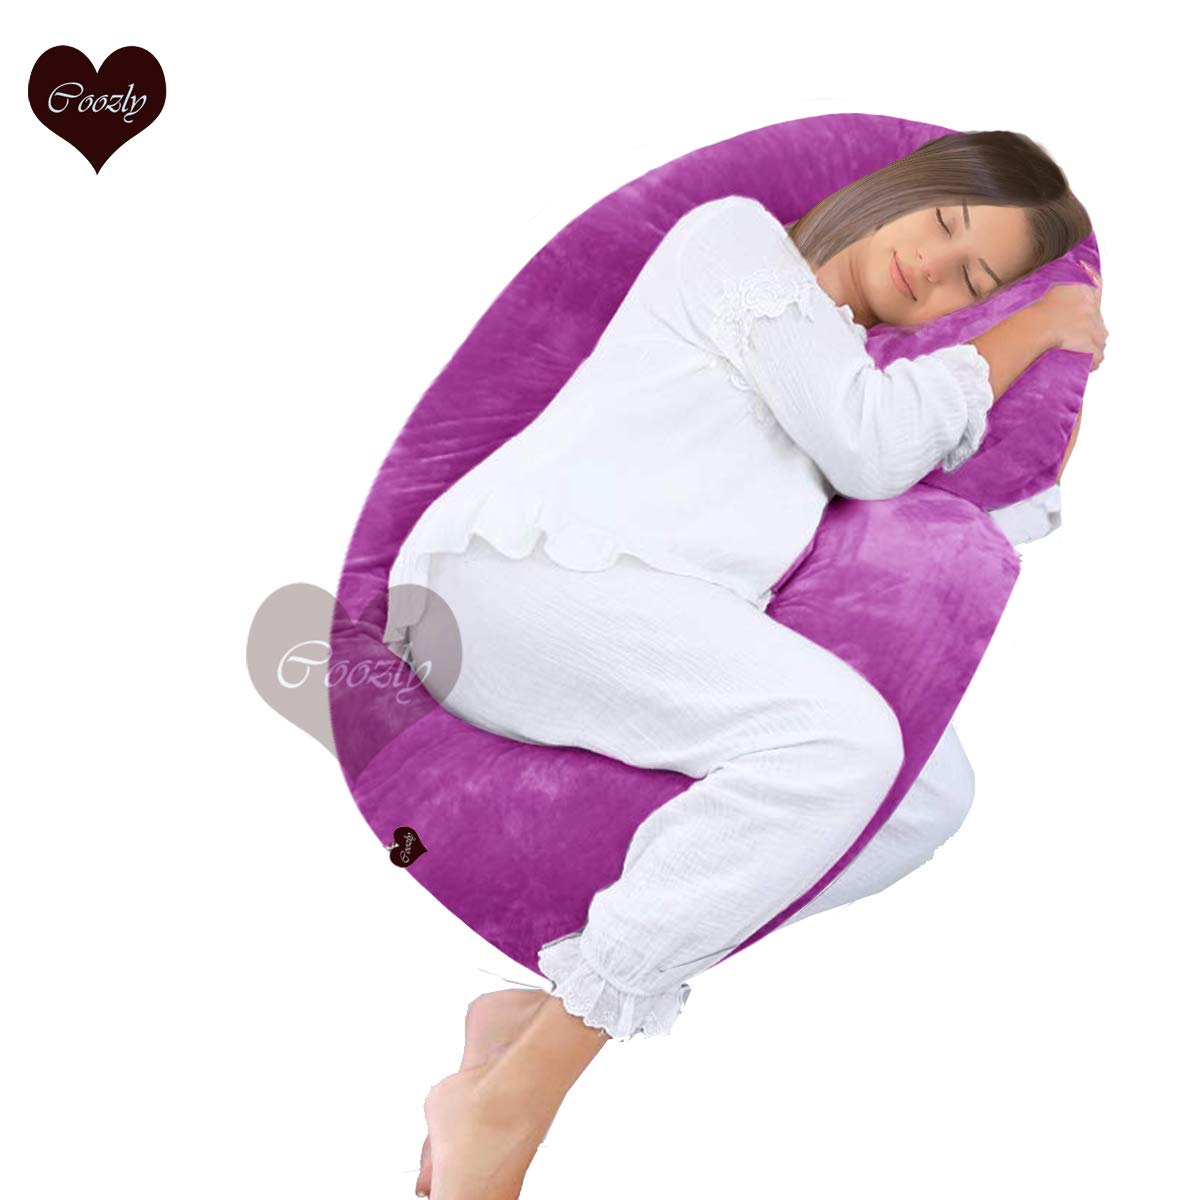 Fuschia Velvet - Coozly Alpha Basic Maternity Pillow | Pregnancy Pillow